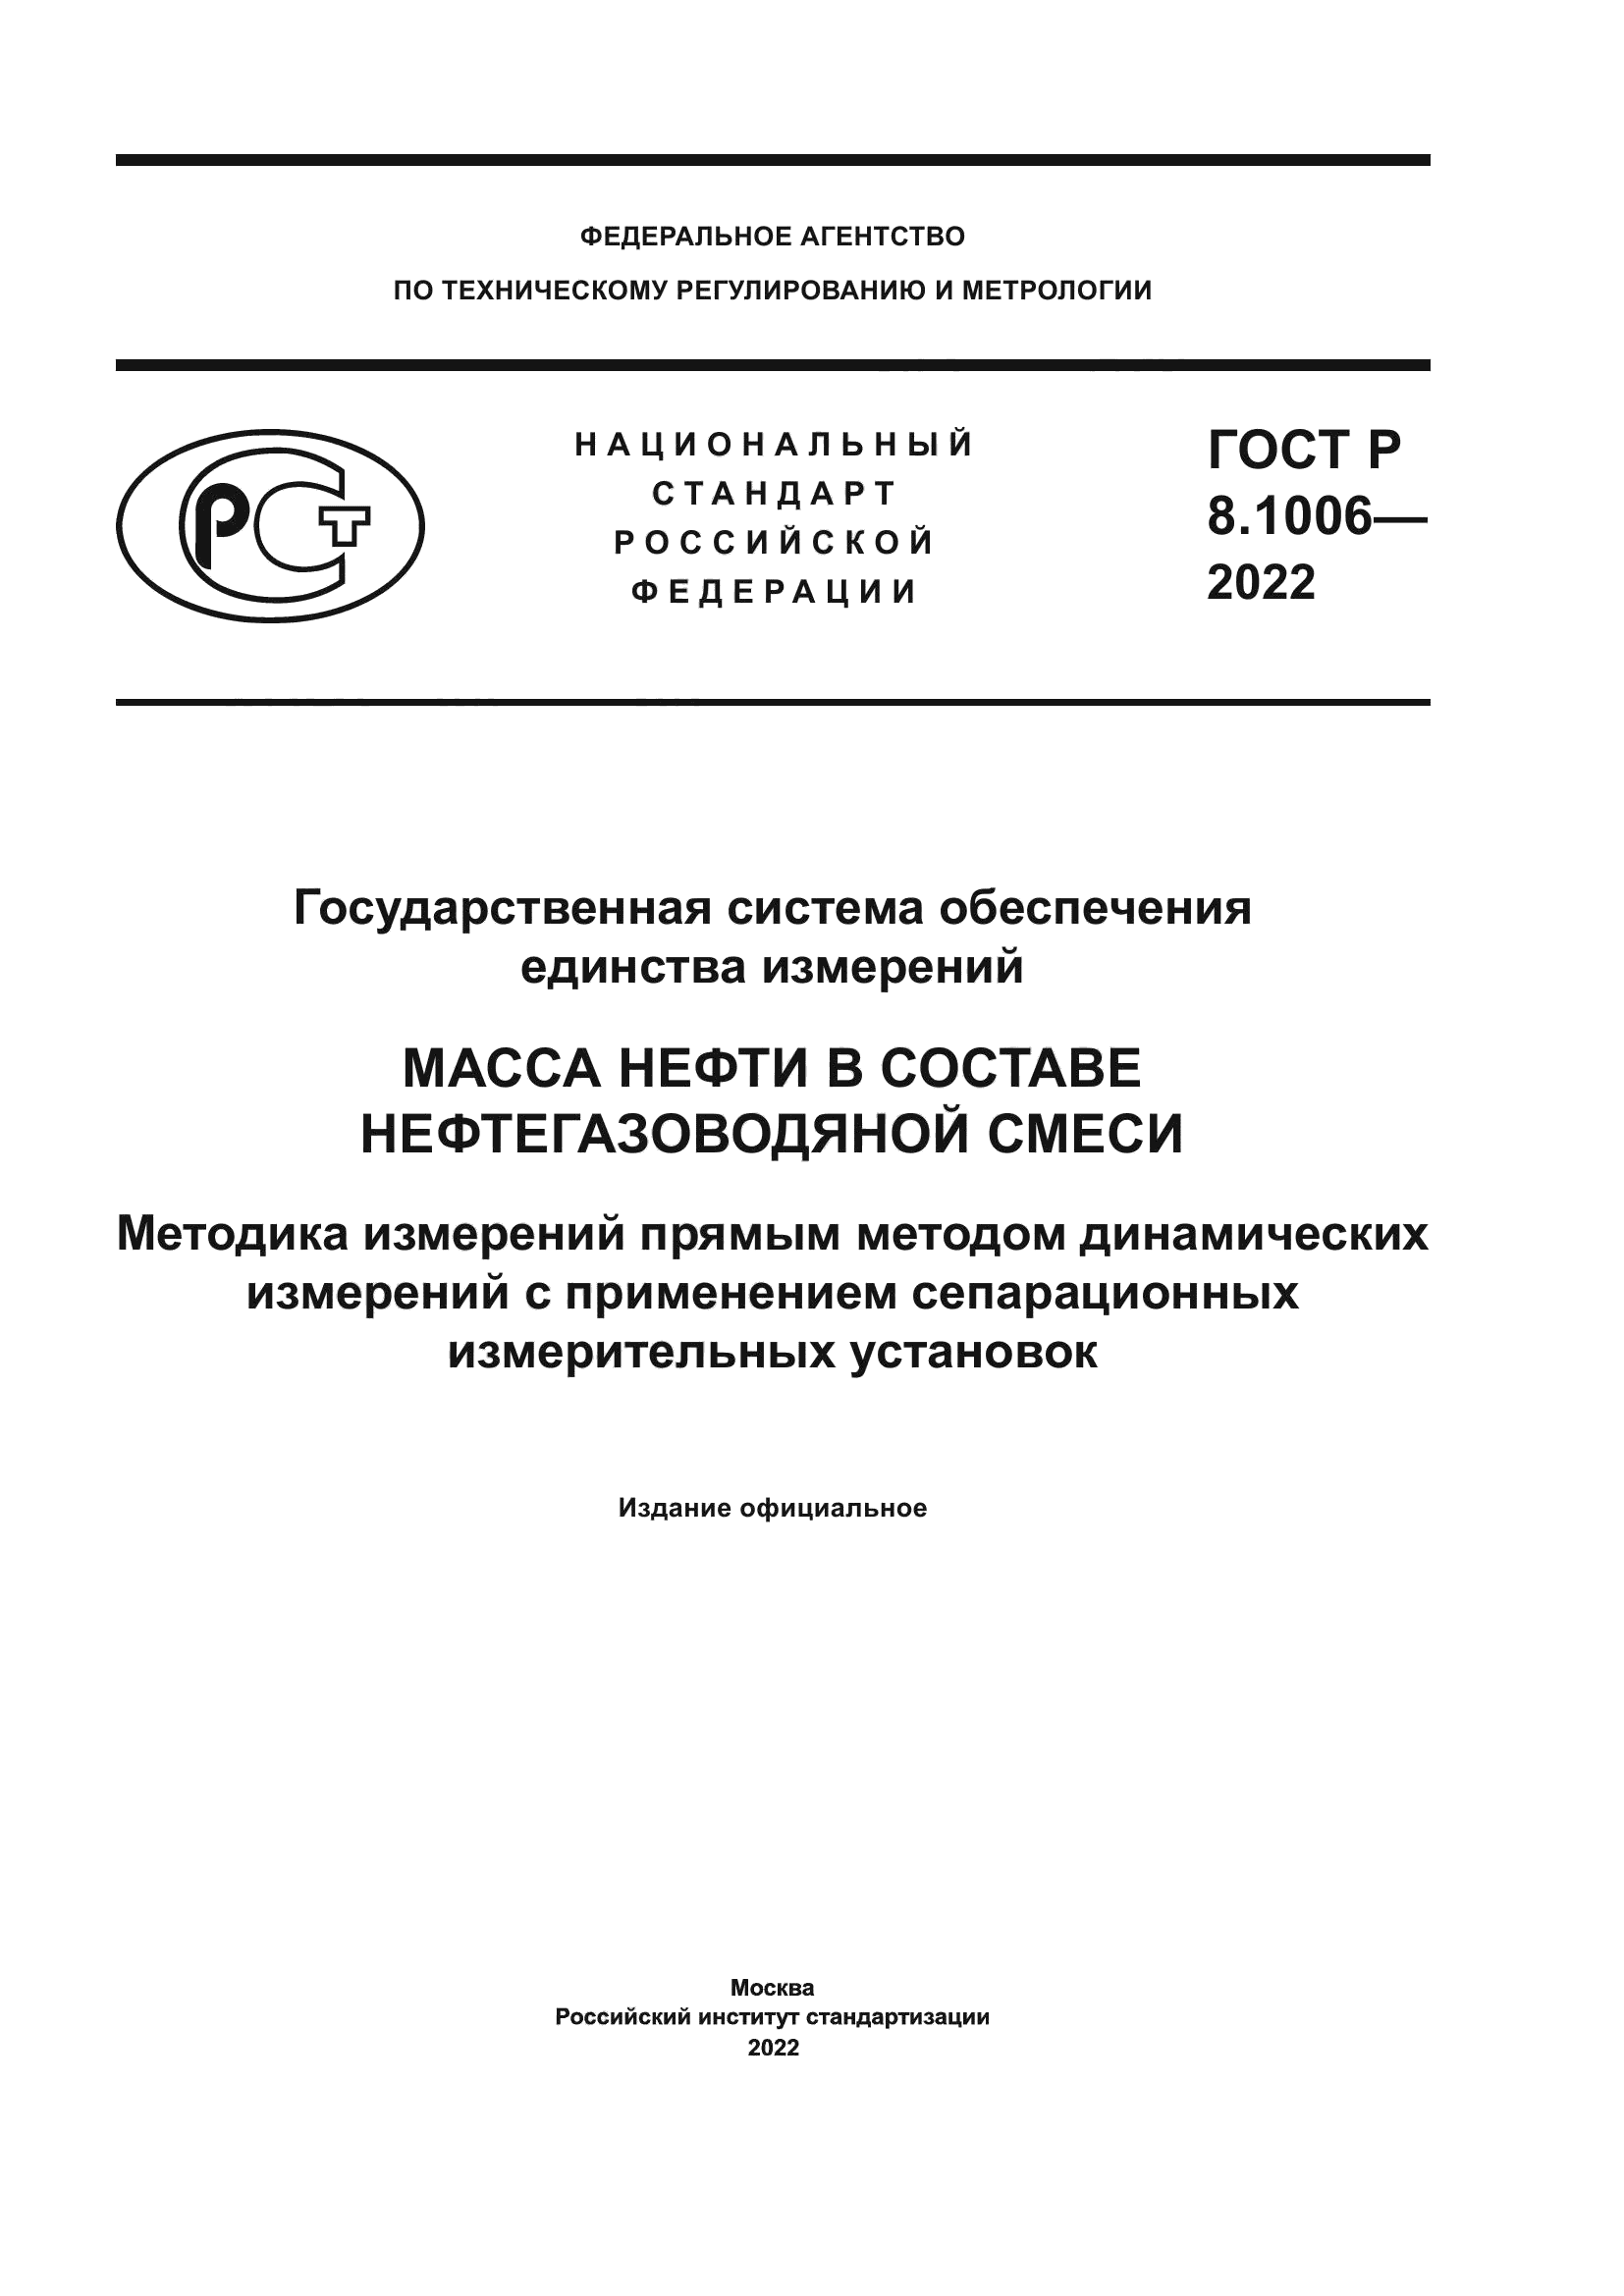 ГОСТ Р 8.1006-2022